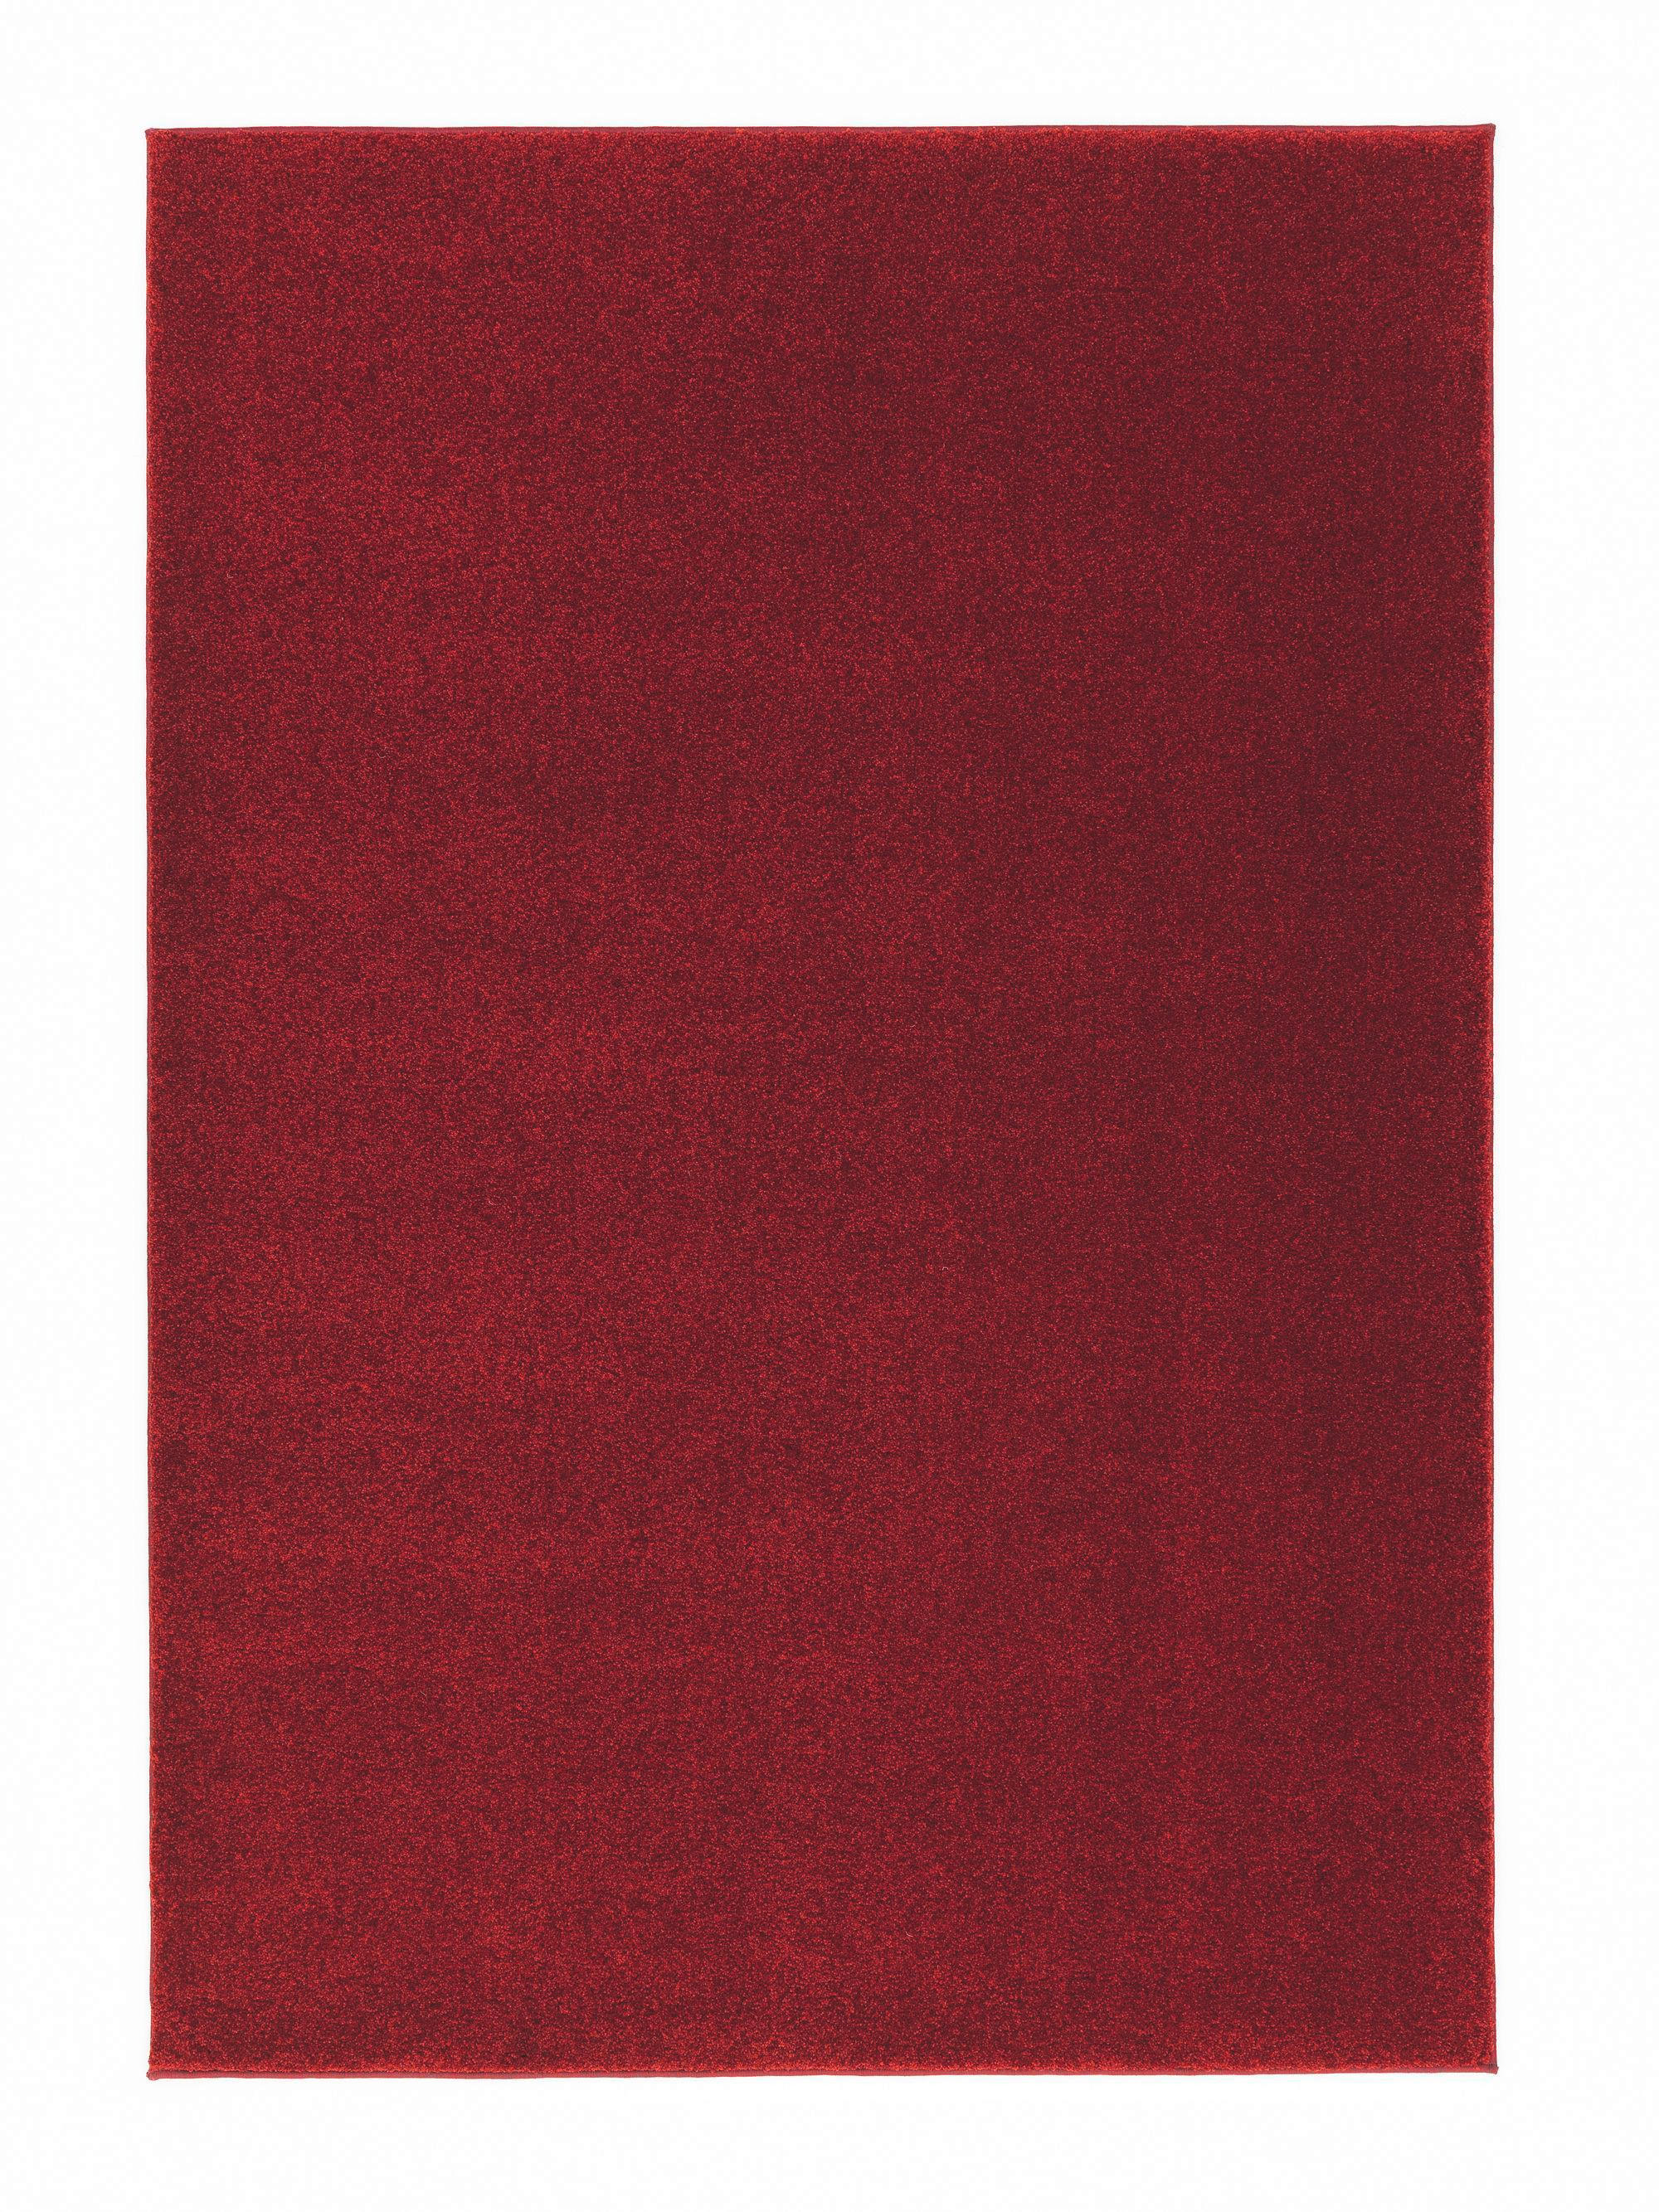 HOCHFLORTEPPICH 67/130 cm  - Rot, Basics, Textil (67/130cm) - Novel